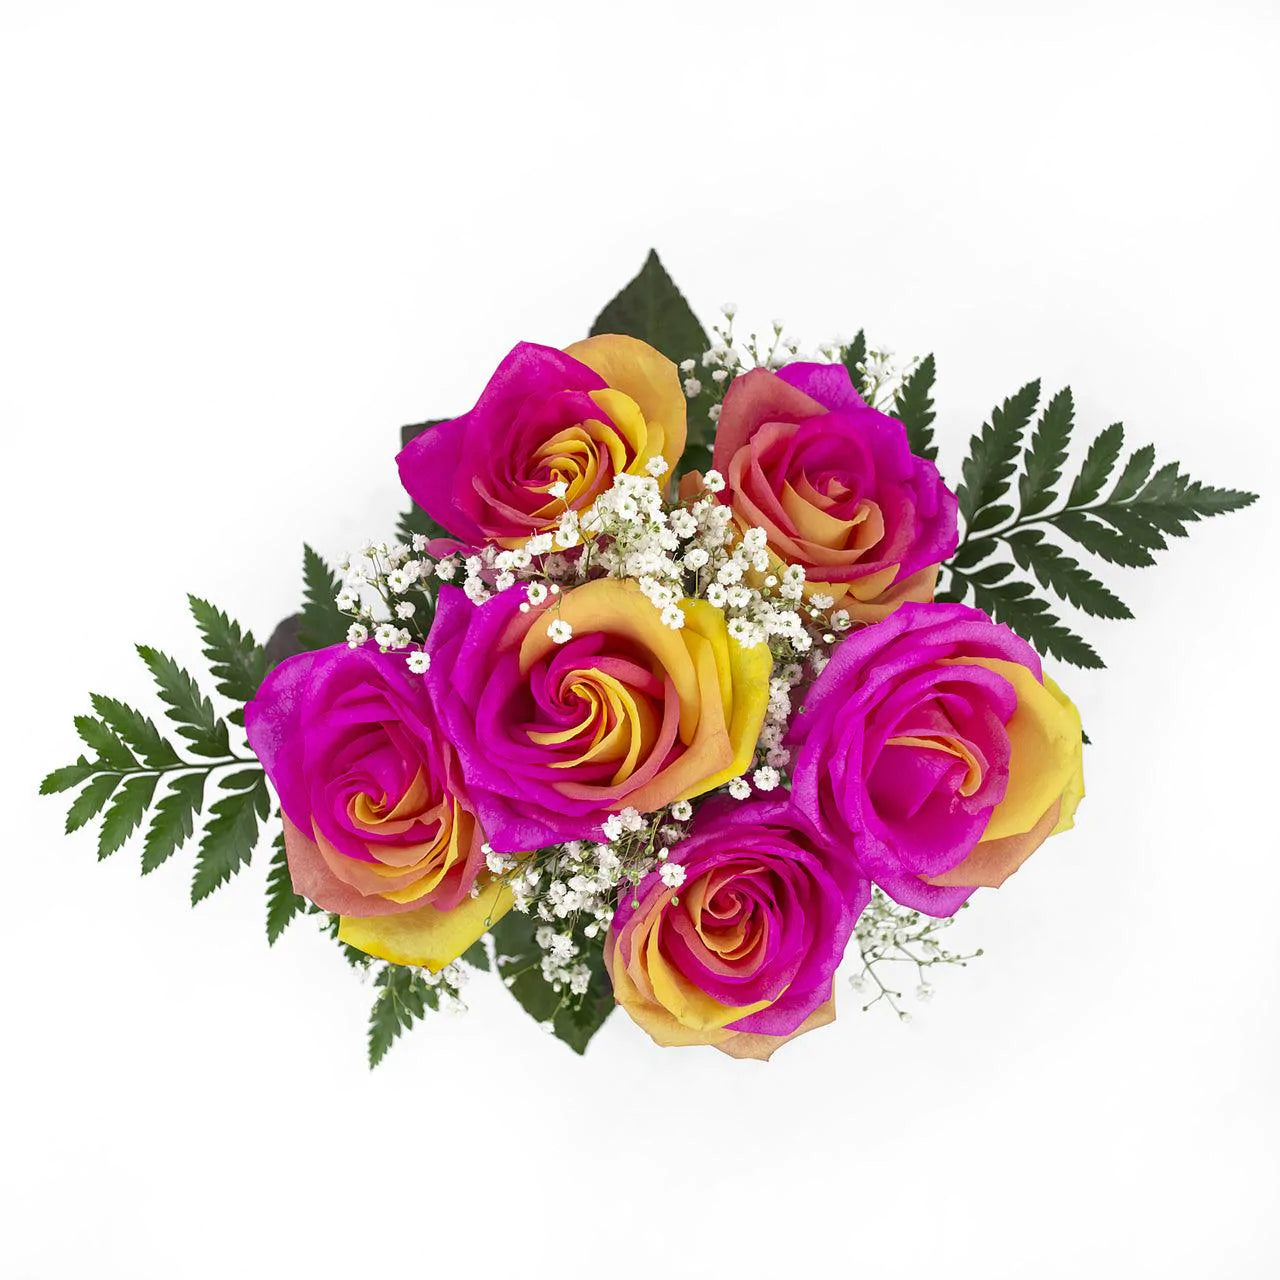 Yellow and Pink Rose 6-stem rose bqt - 8